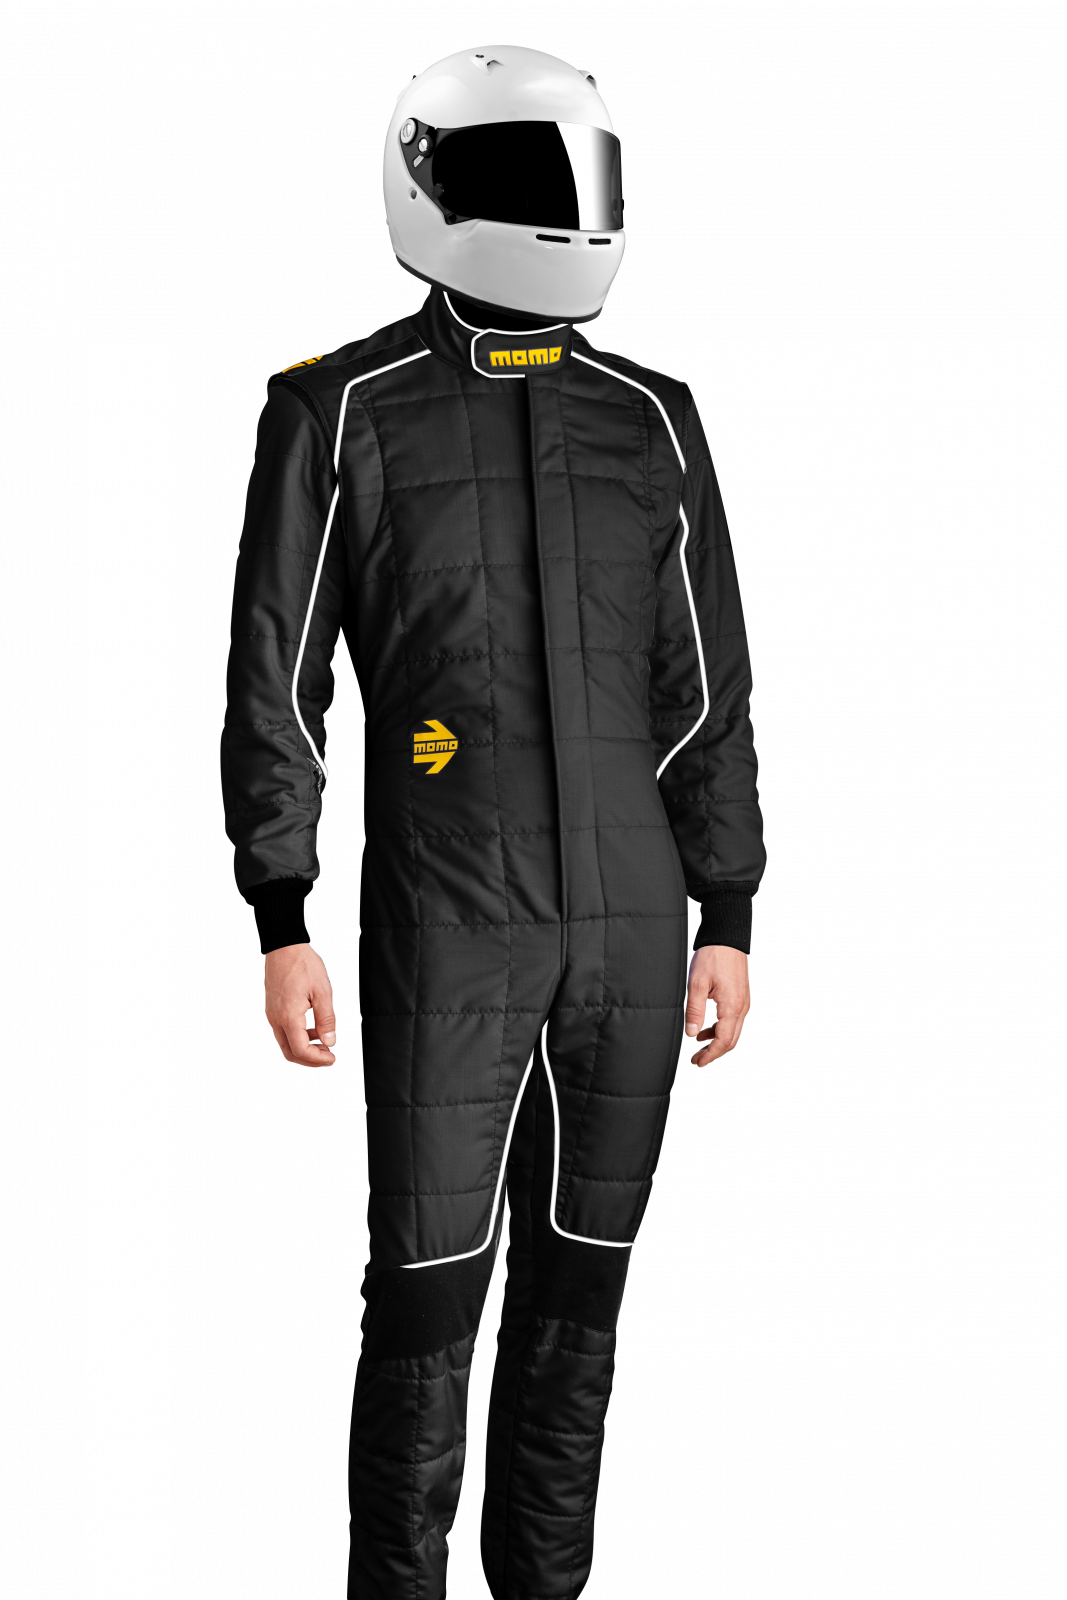 MOMO Corsa Evo Black Size 58 Racing Suit TUCOEVOBLK58